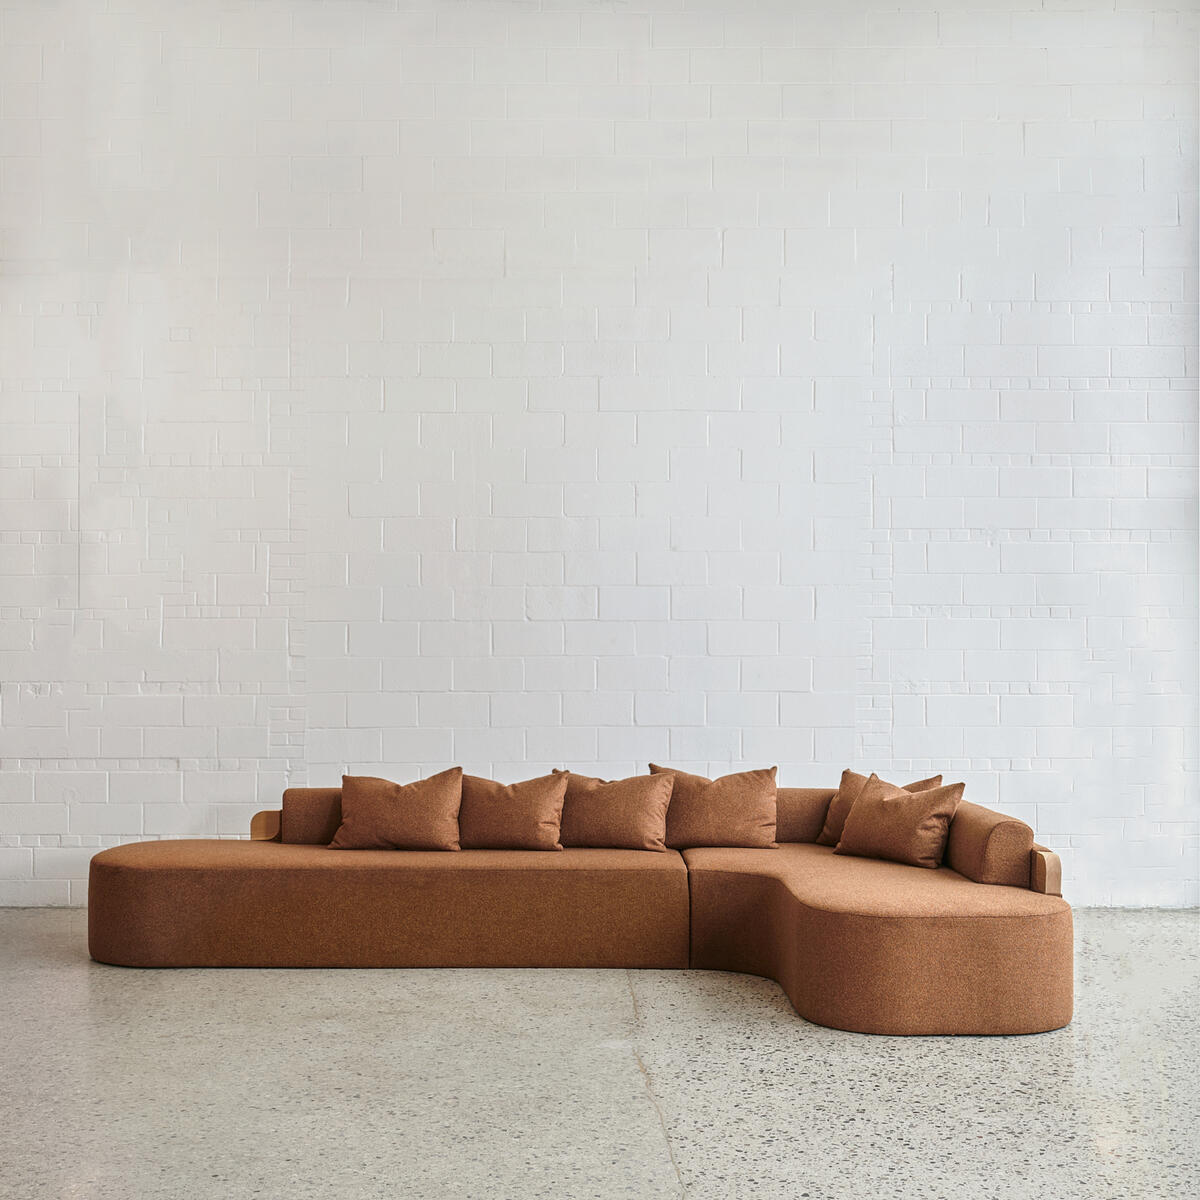 The Riverside sofa by Hollis+Morris